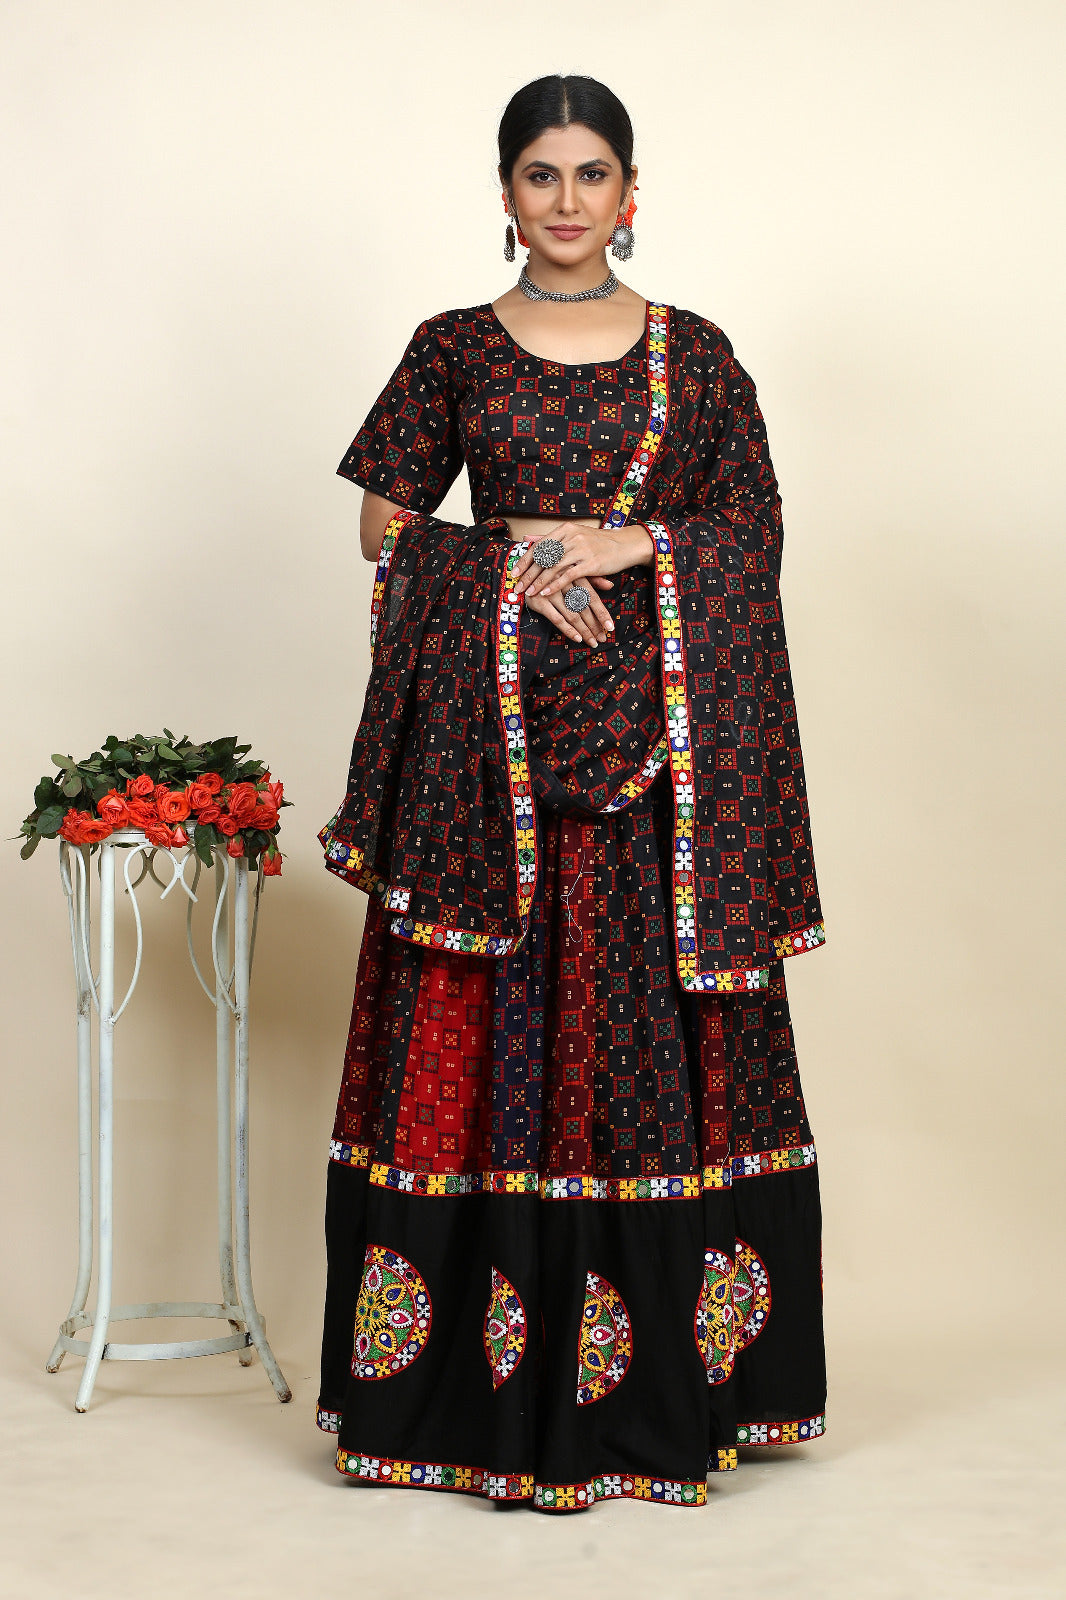 Maroon color cotton rayon navratri lehenga choli in embroidered and printed work